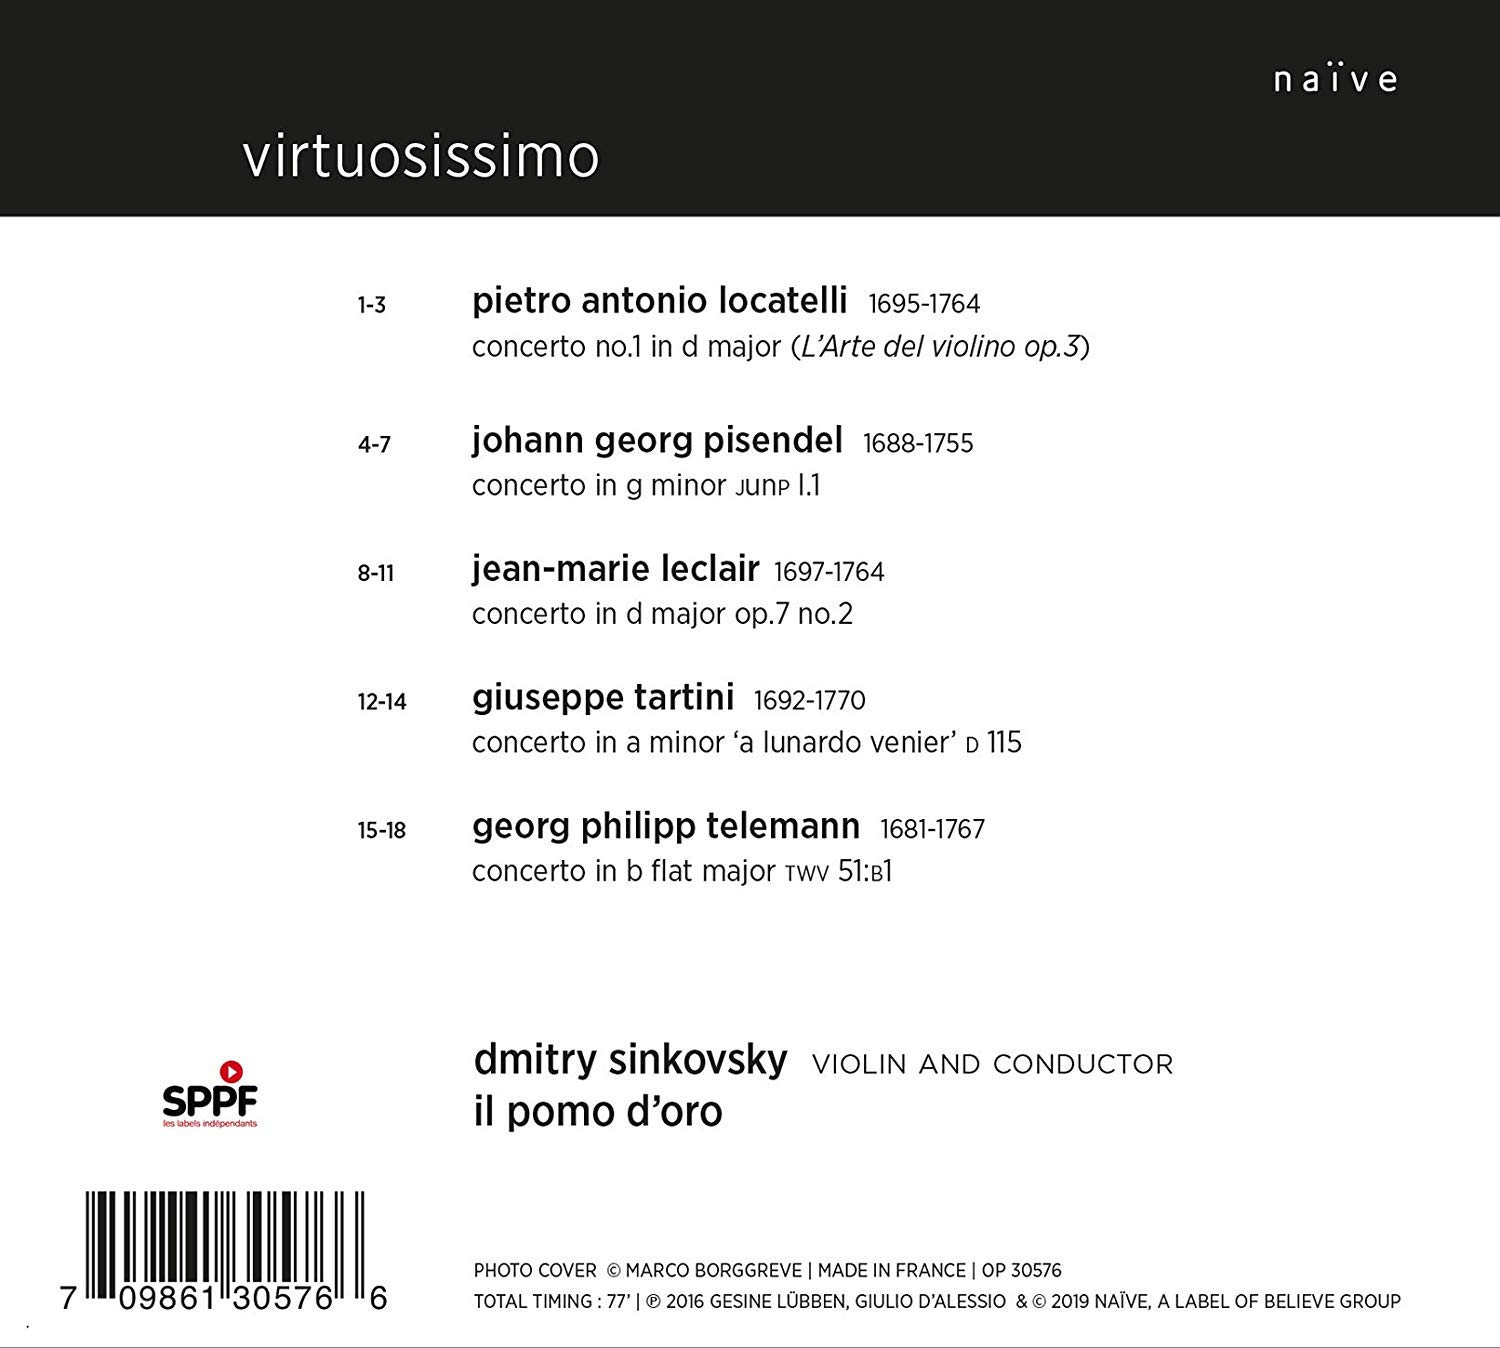 Dmitry Sinkovsky 비르투오지시모 - 바이올린 협주곡집 (virtuosissimo)